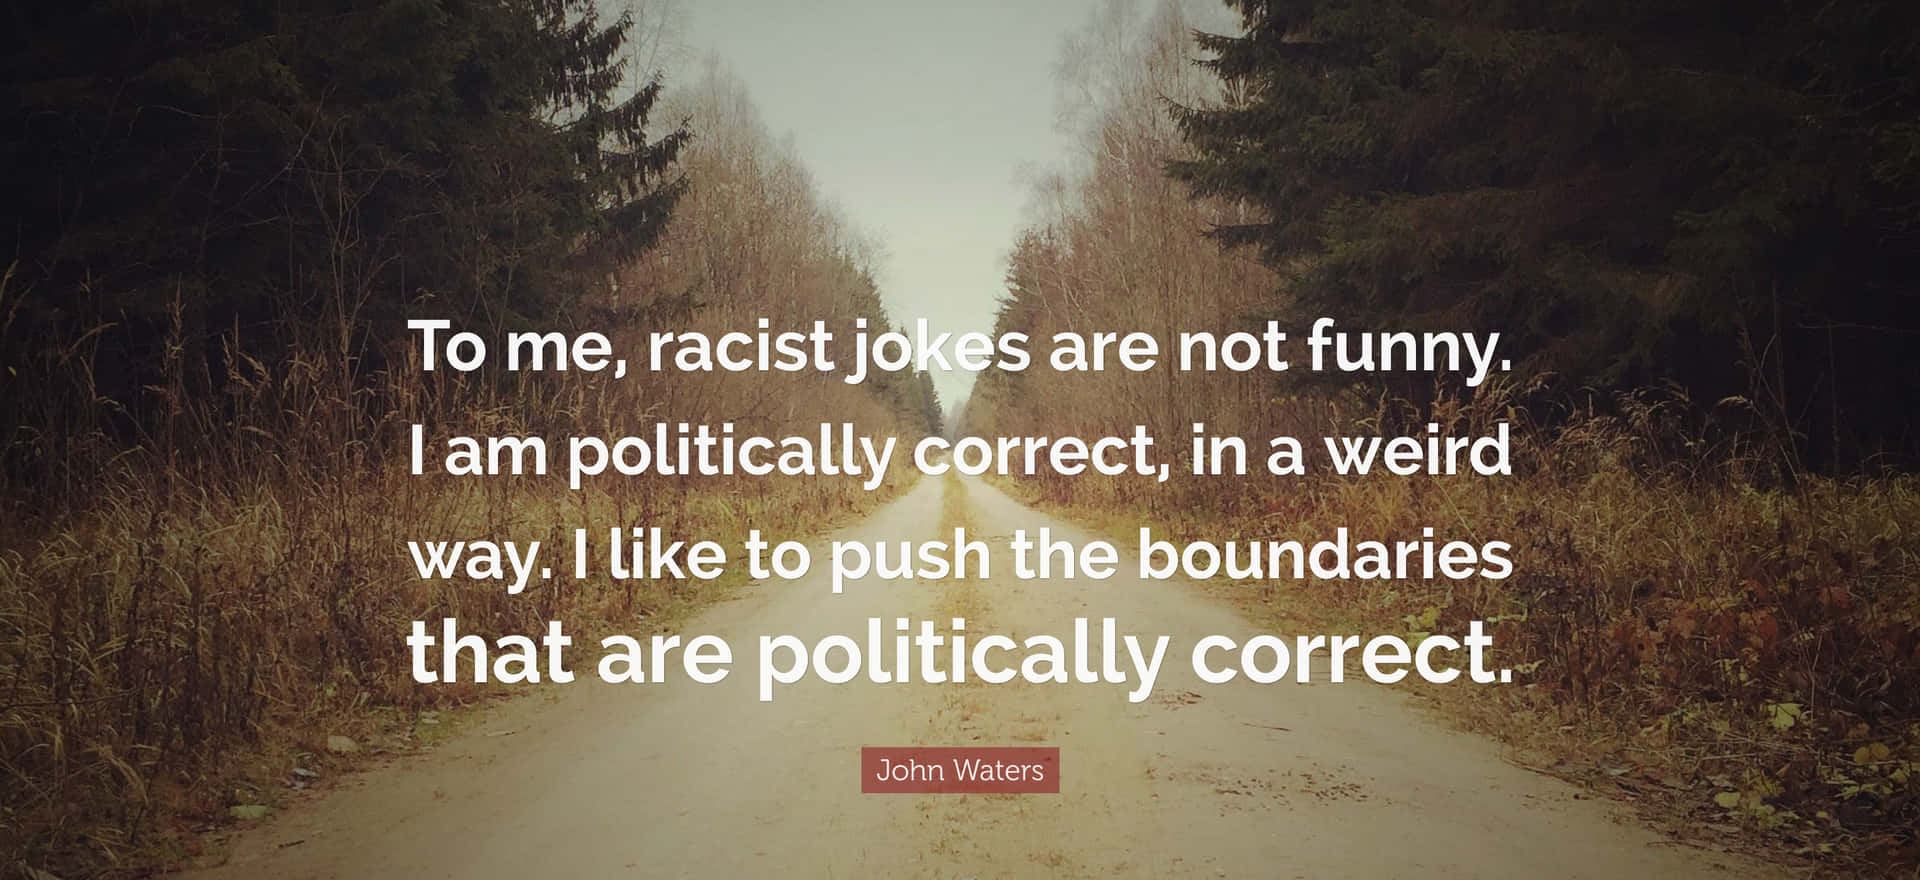 John Waters Political Correctness Quote Wallpaper